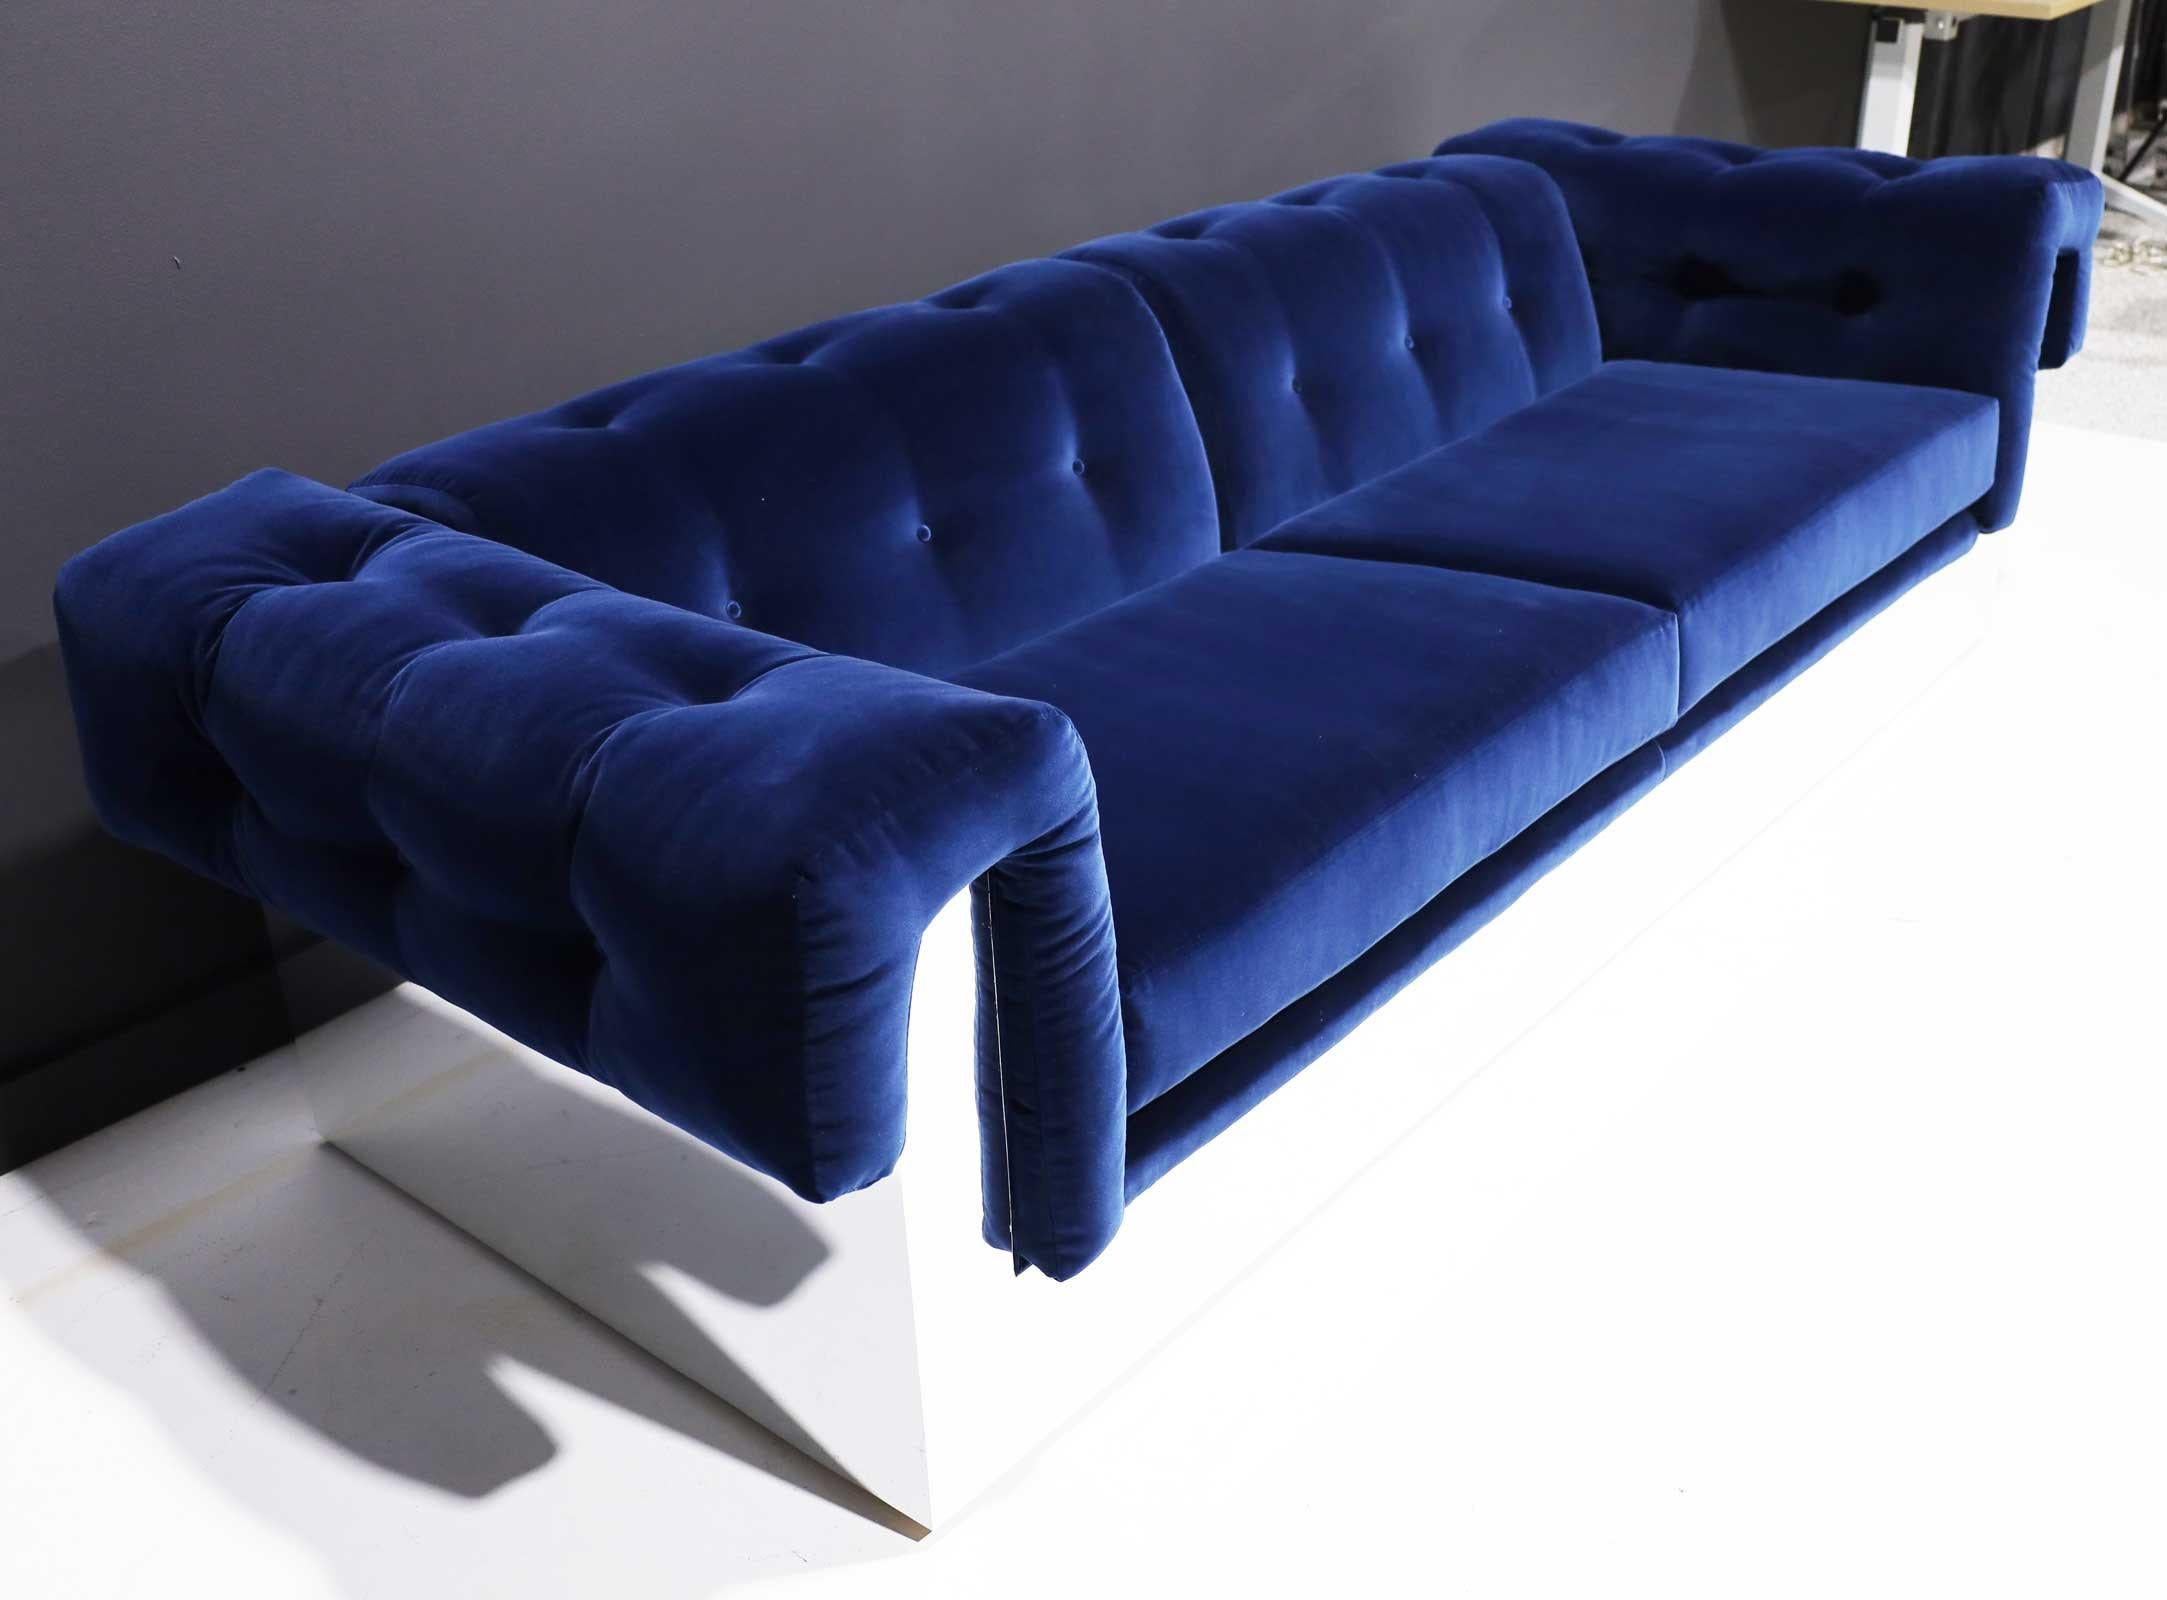 Mid-Century Modern Milo Baughman Button Tufted Chrome Sofa in a Navy Blue Velvet from France